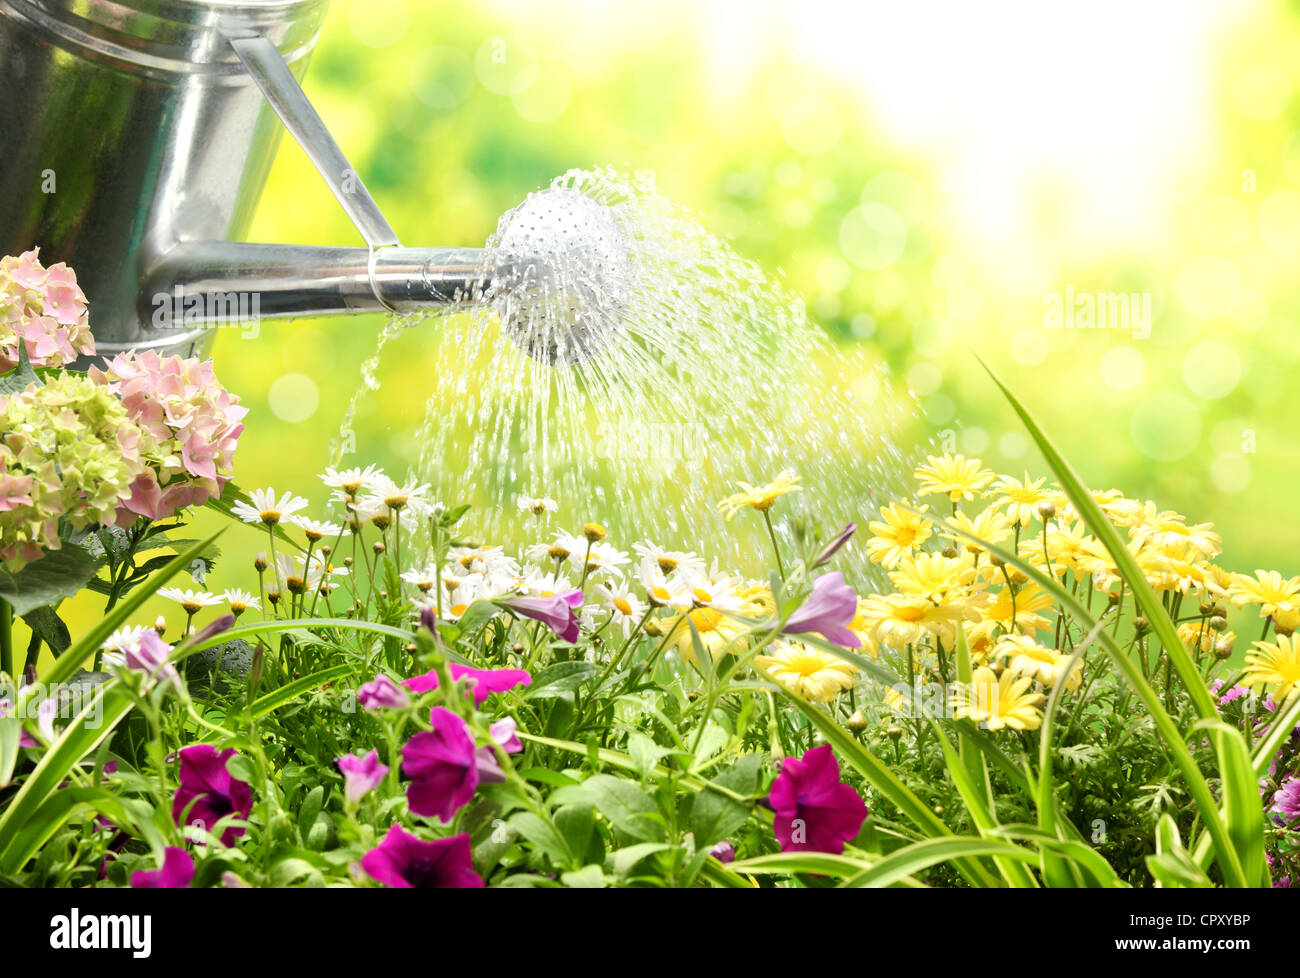 Gardening work- Watering flowers in a garden. Stock Photo